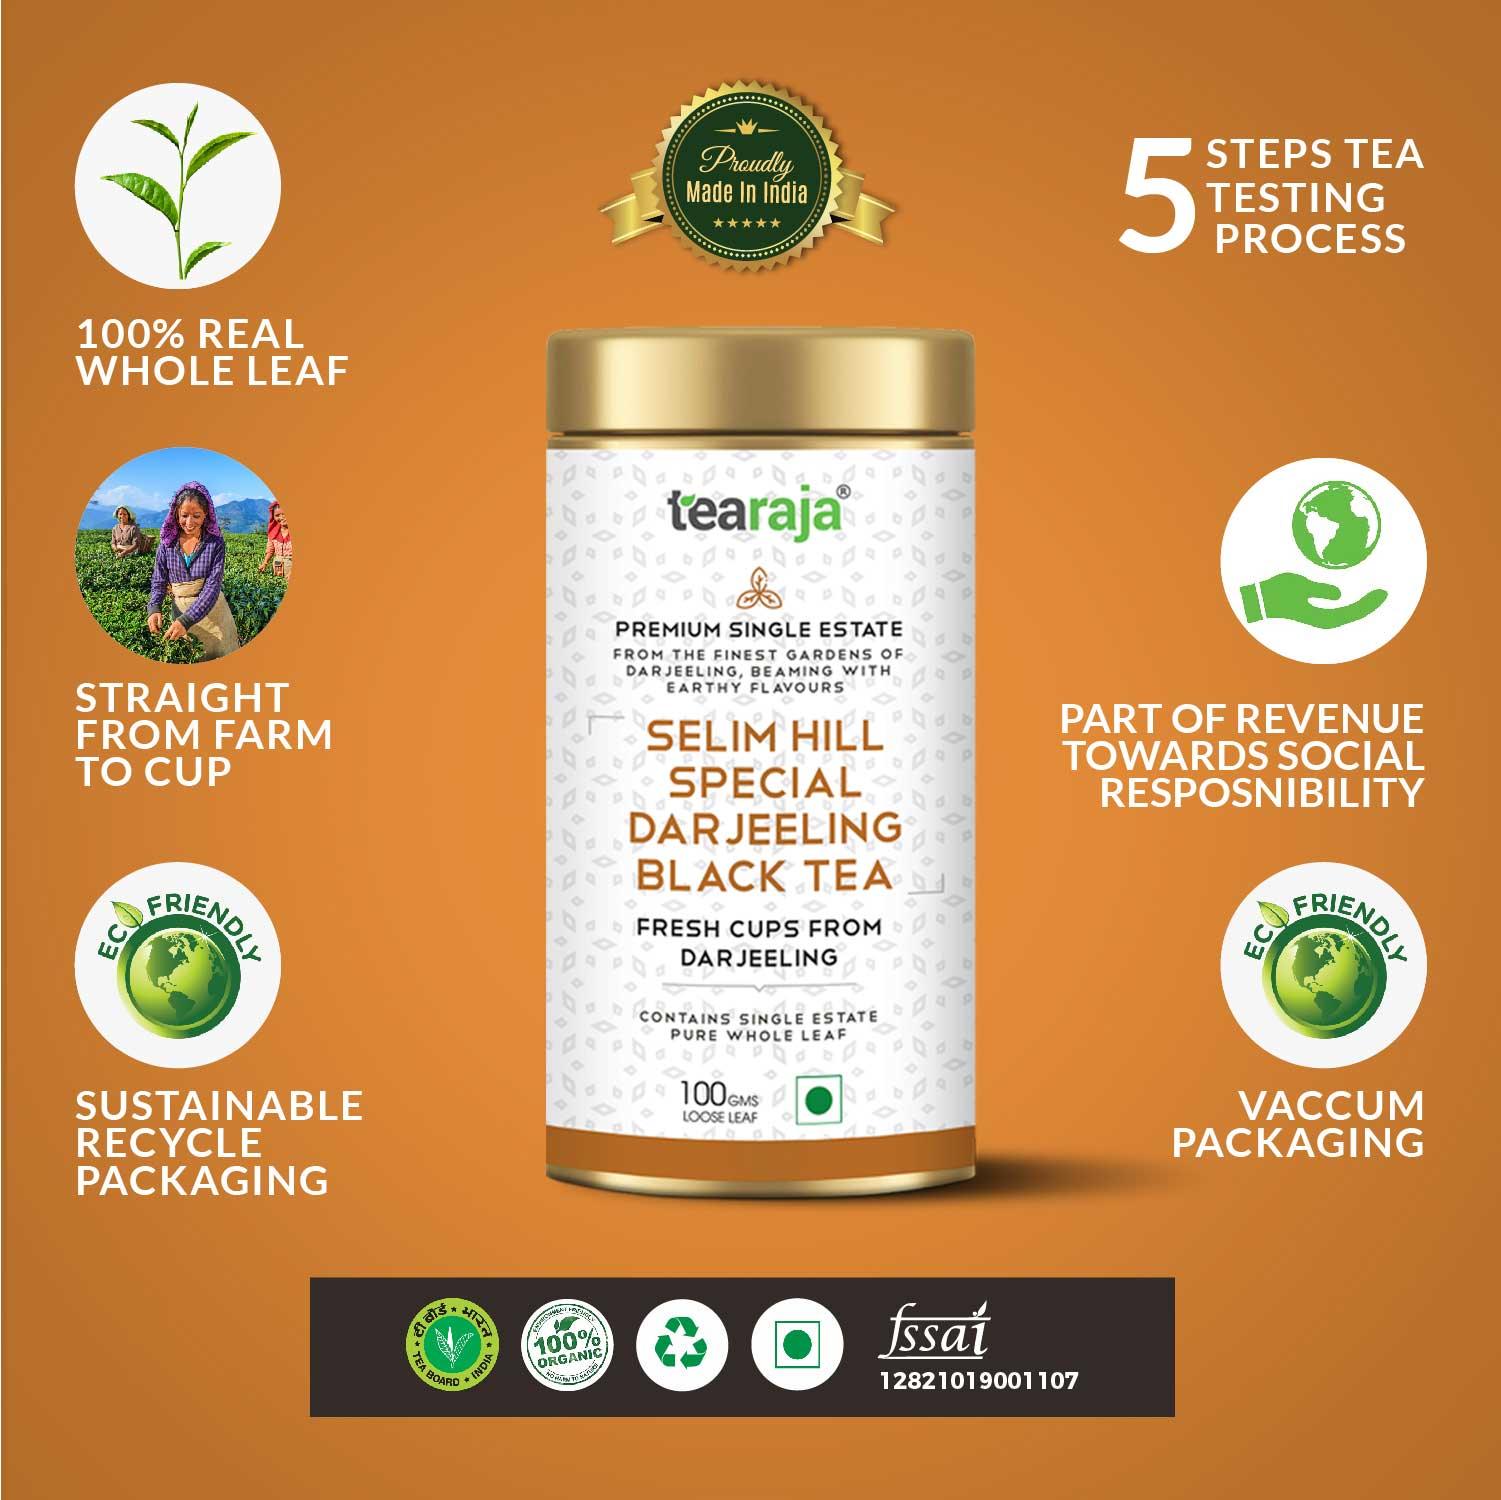 Selim Hill Special Darjeeling Black Tea 30 Teabags - Tearaja